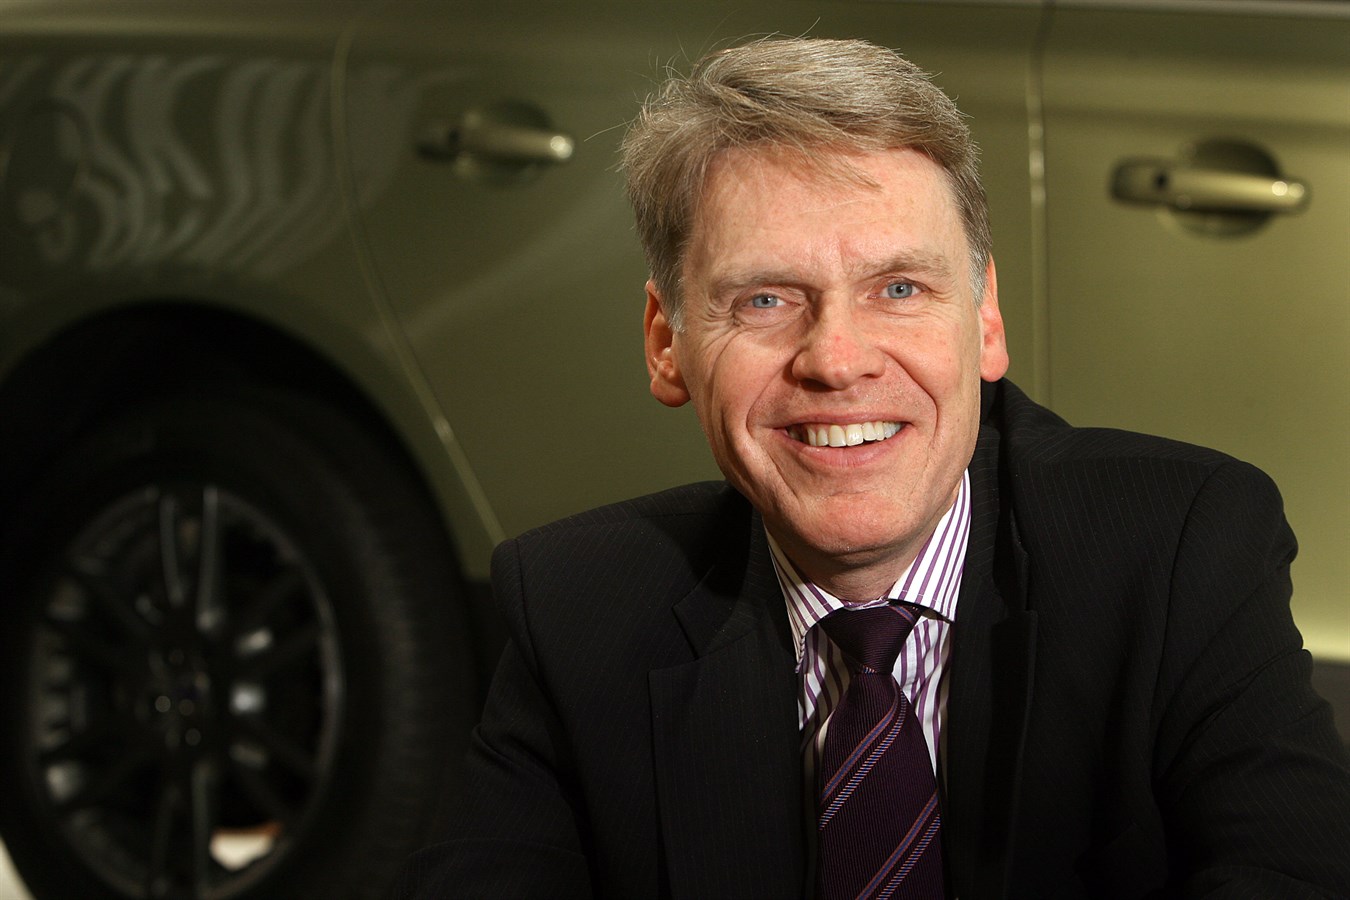 Paul Welander,  Senior Vice President, Quality & Customer Satisfaction at Volvo Cars